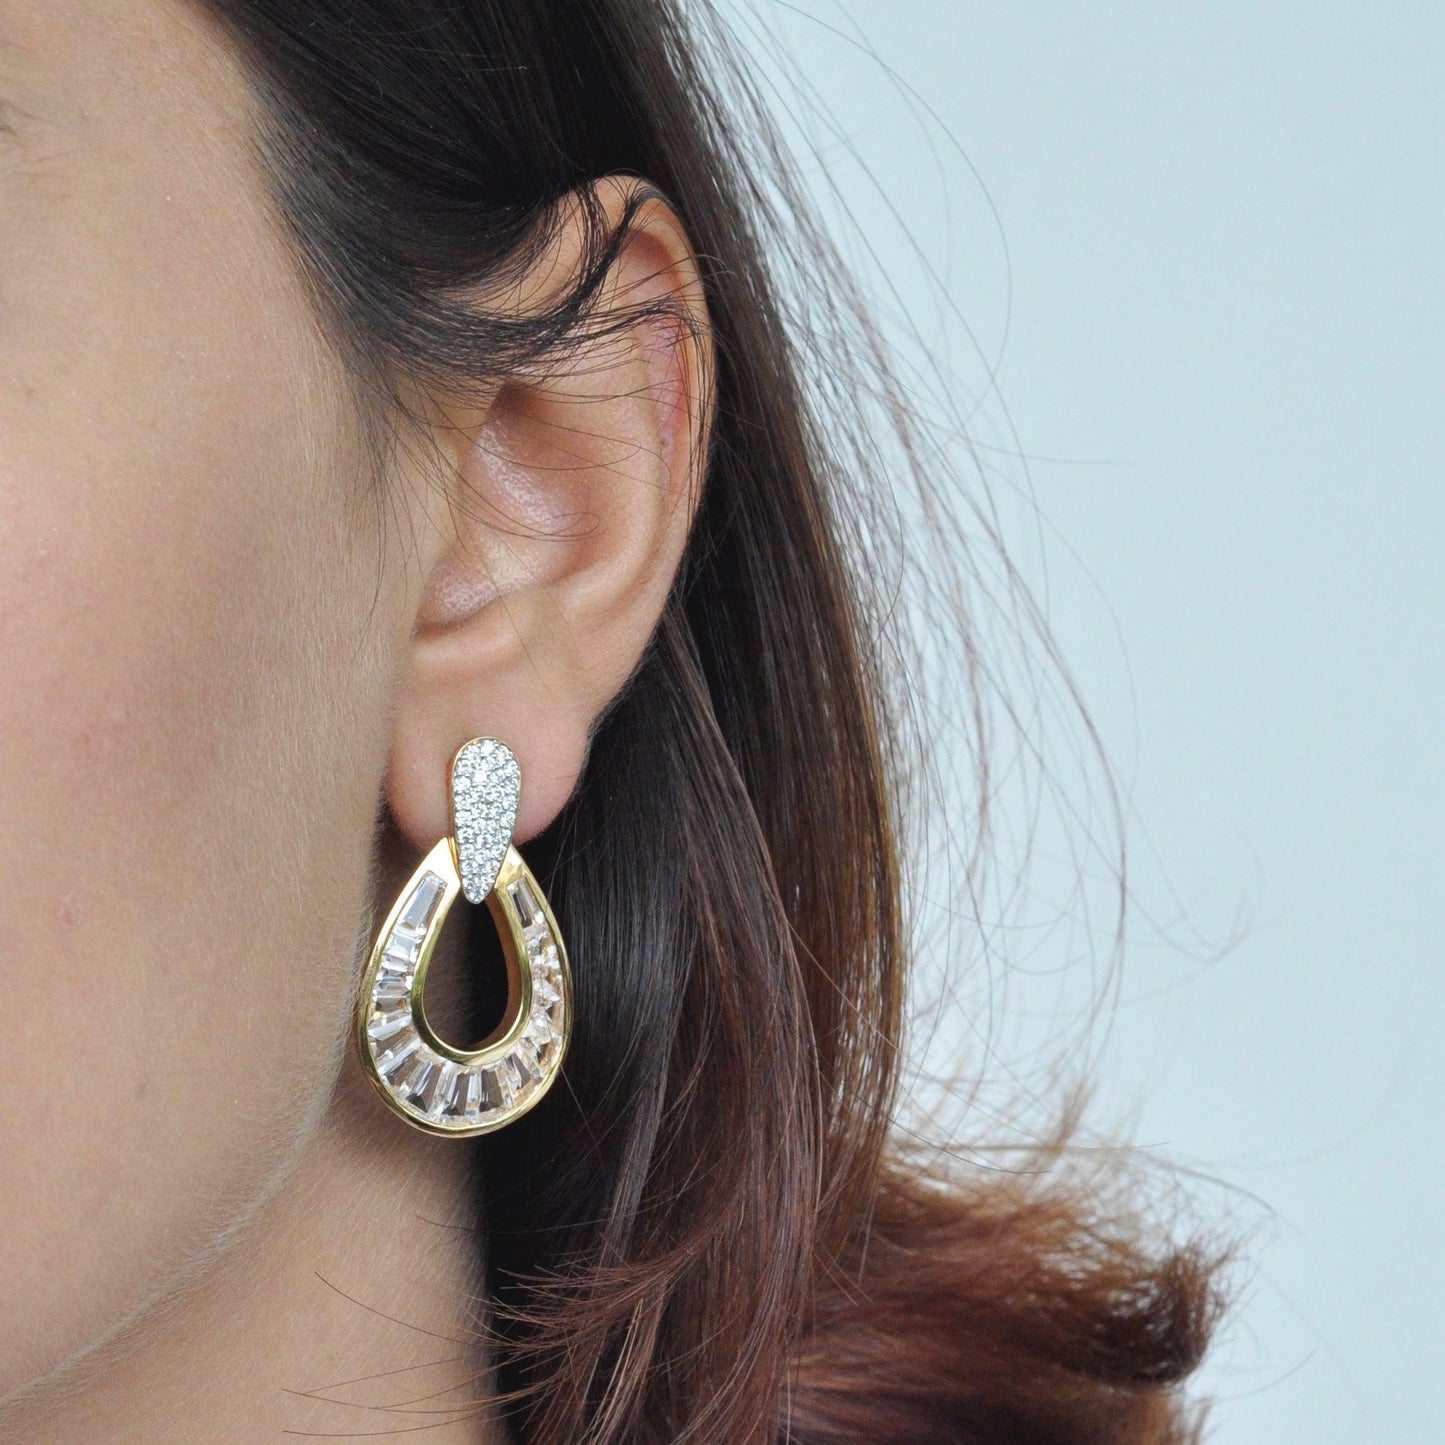 Customizable gemstone earrings with diamonds